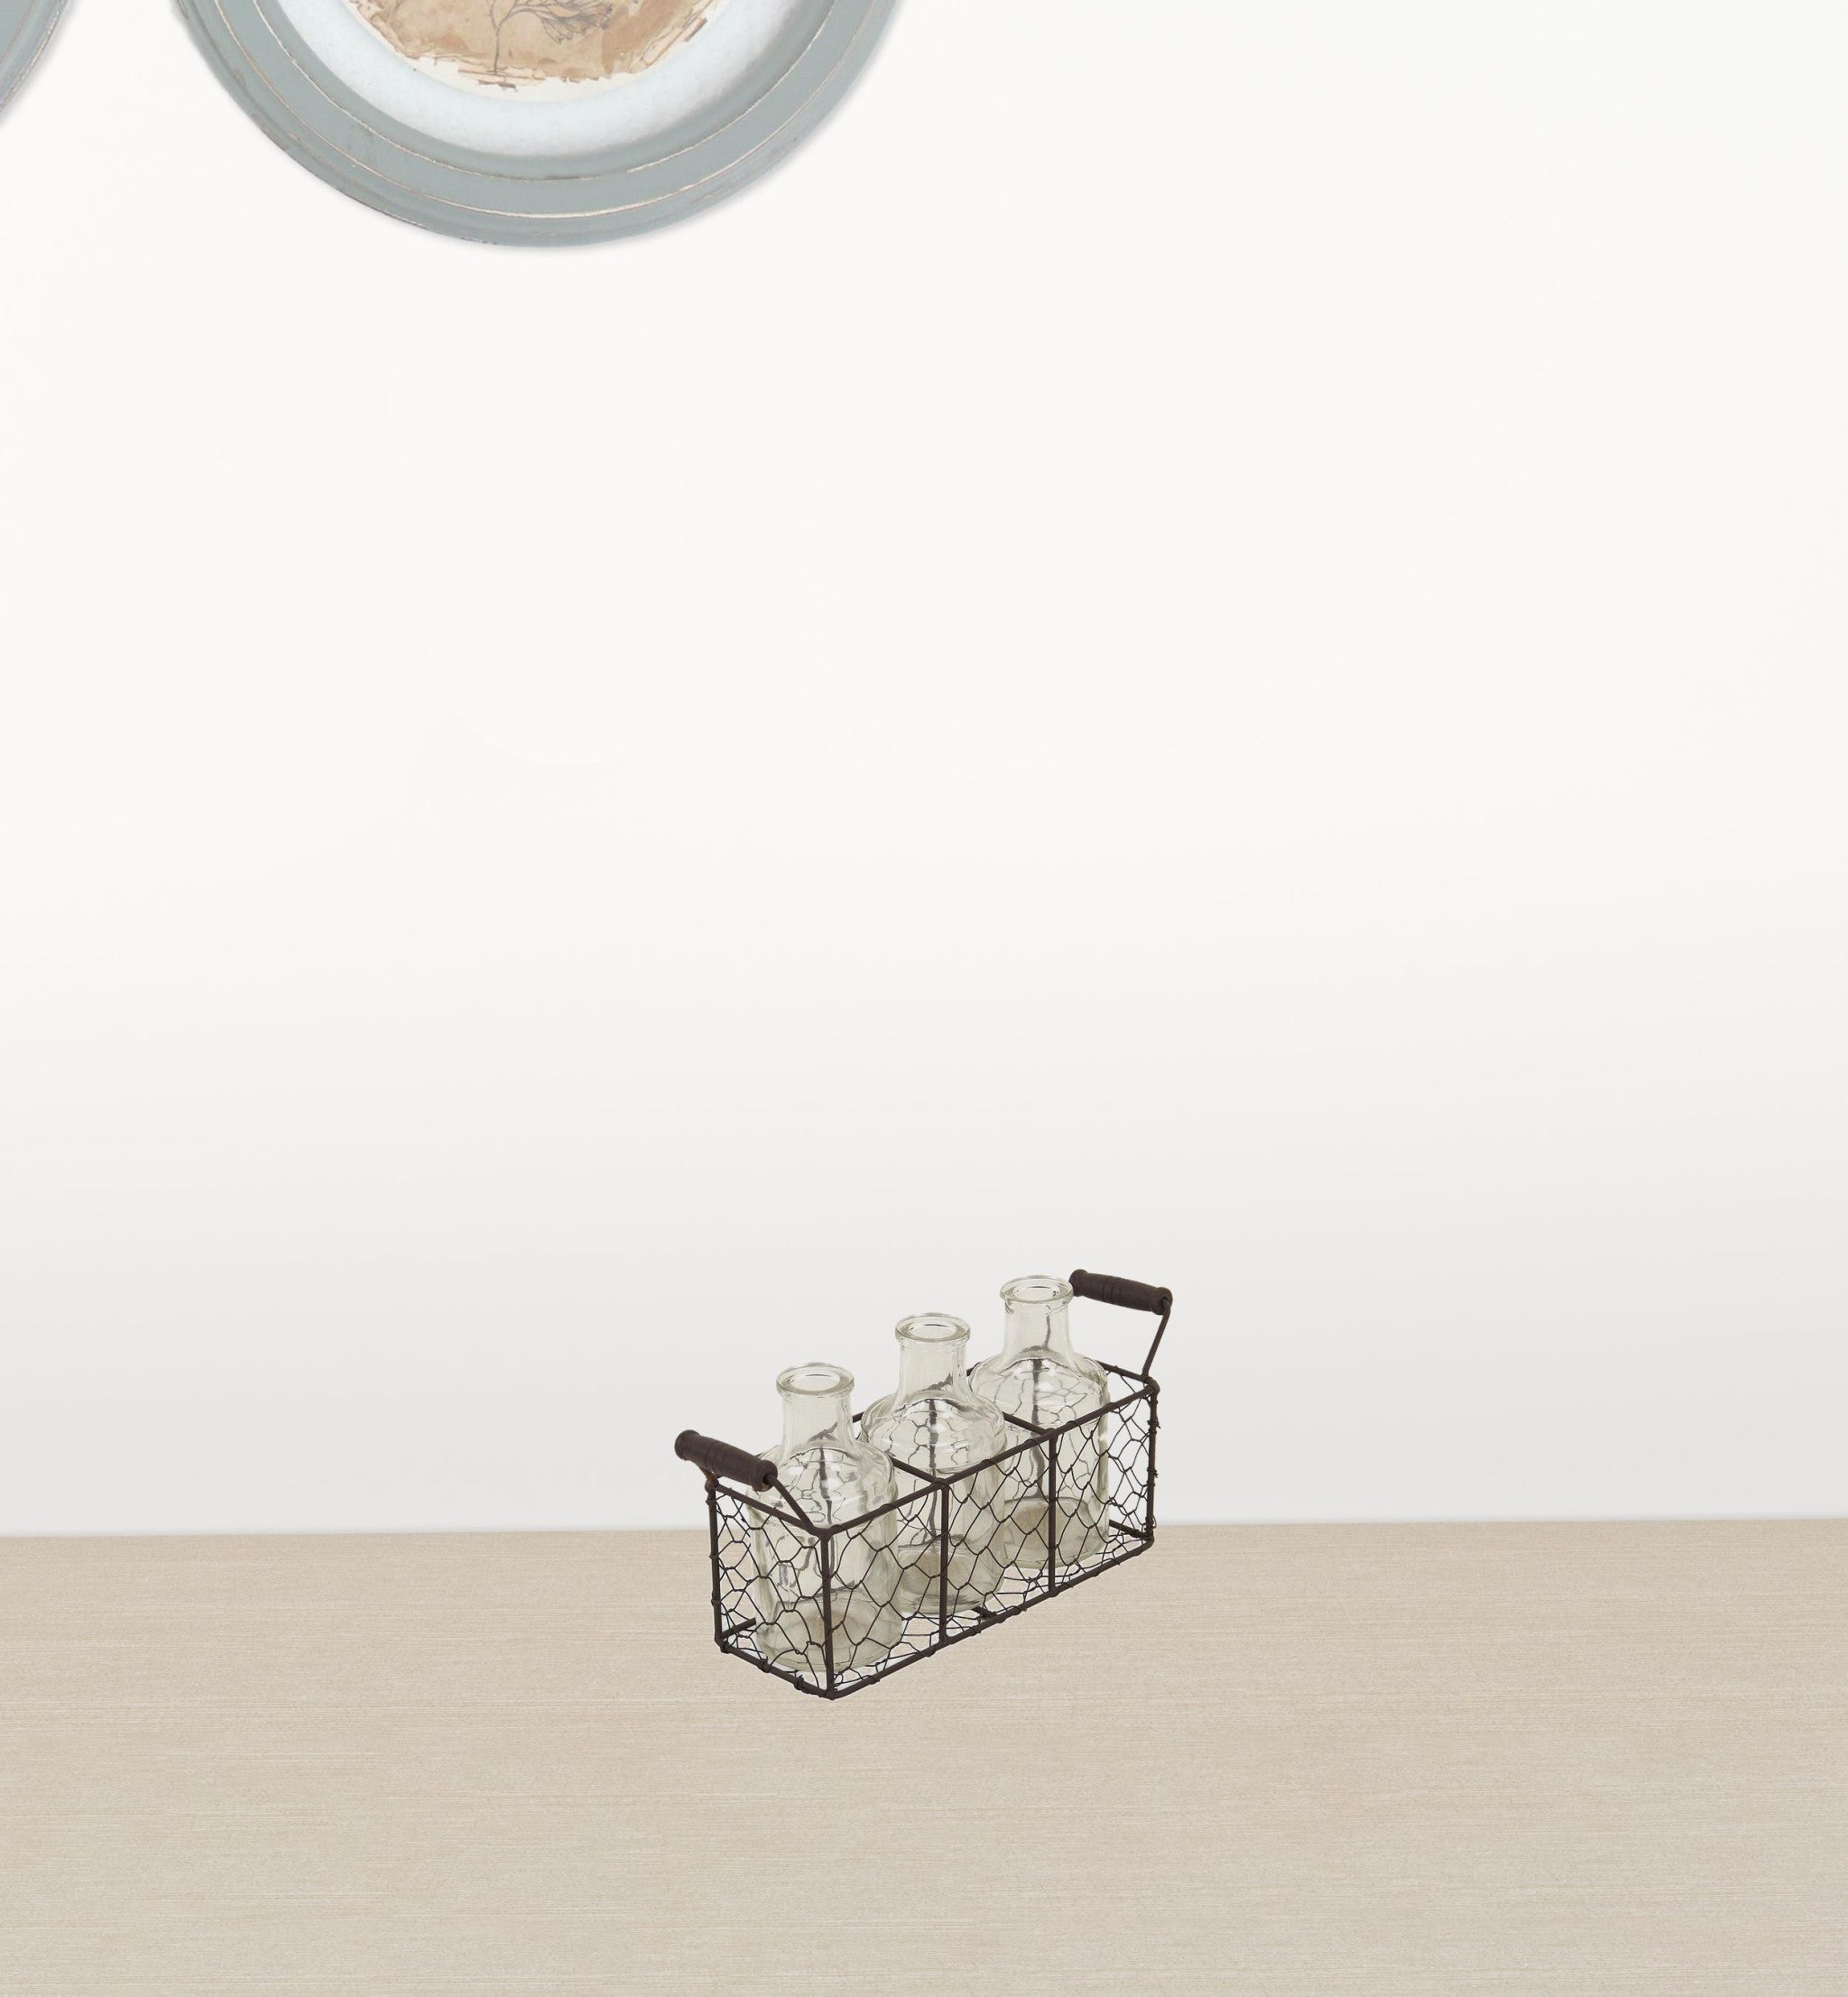 8.5" Set of Three Glass Bottles in Brown Wire Basket